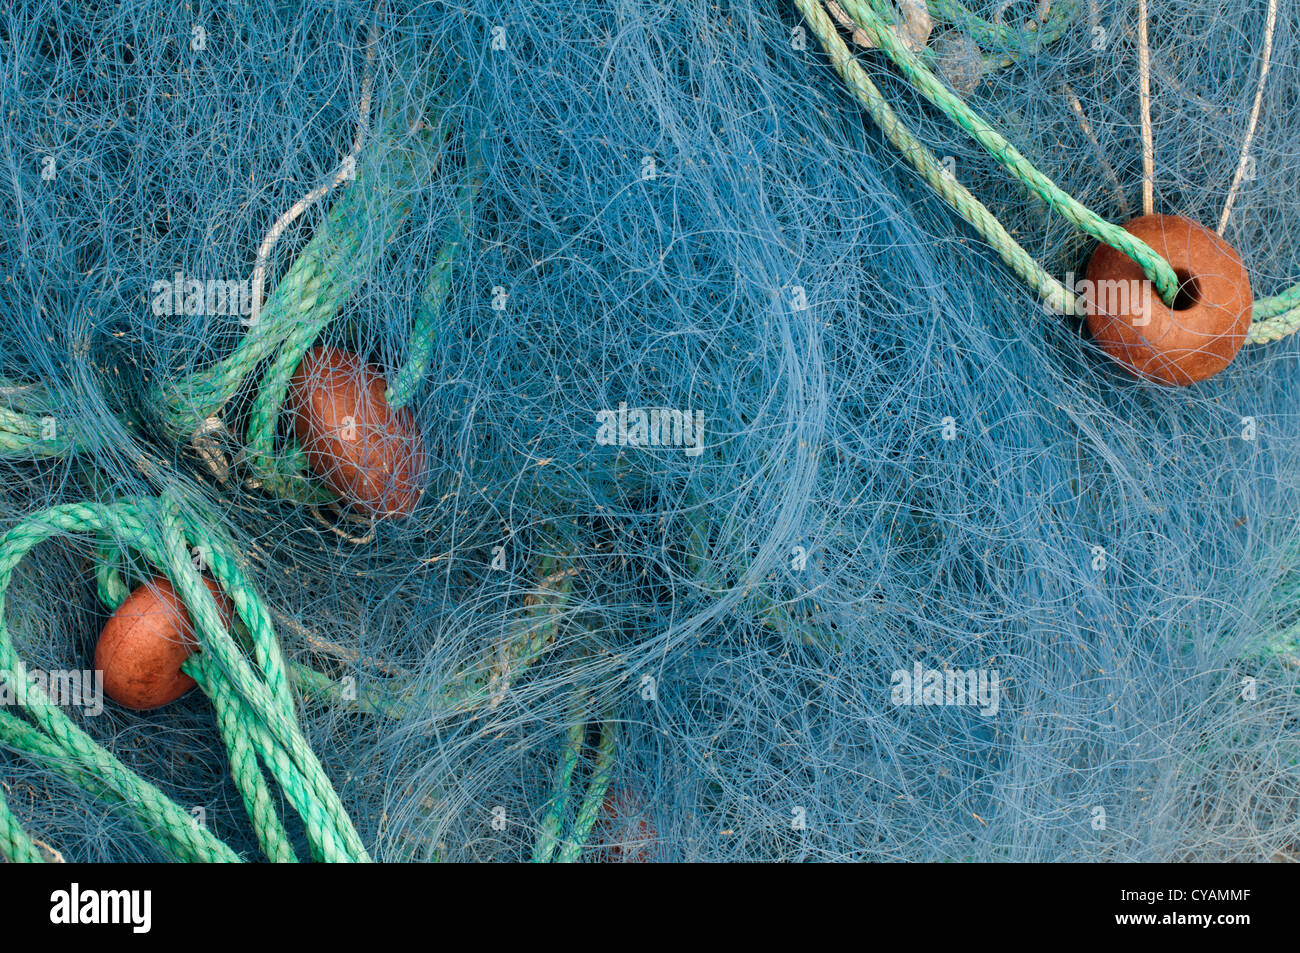 https://c8.alamy.com/comp/CYAMMF/blue-color-fishing-nets-background-CYAMMF.jpg